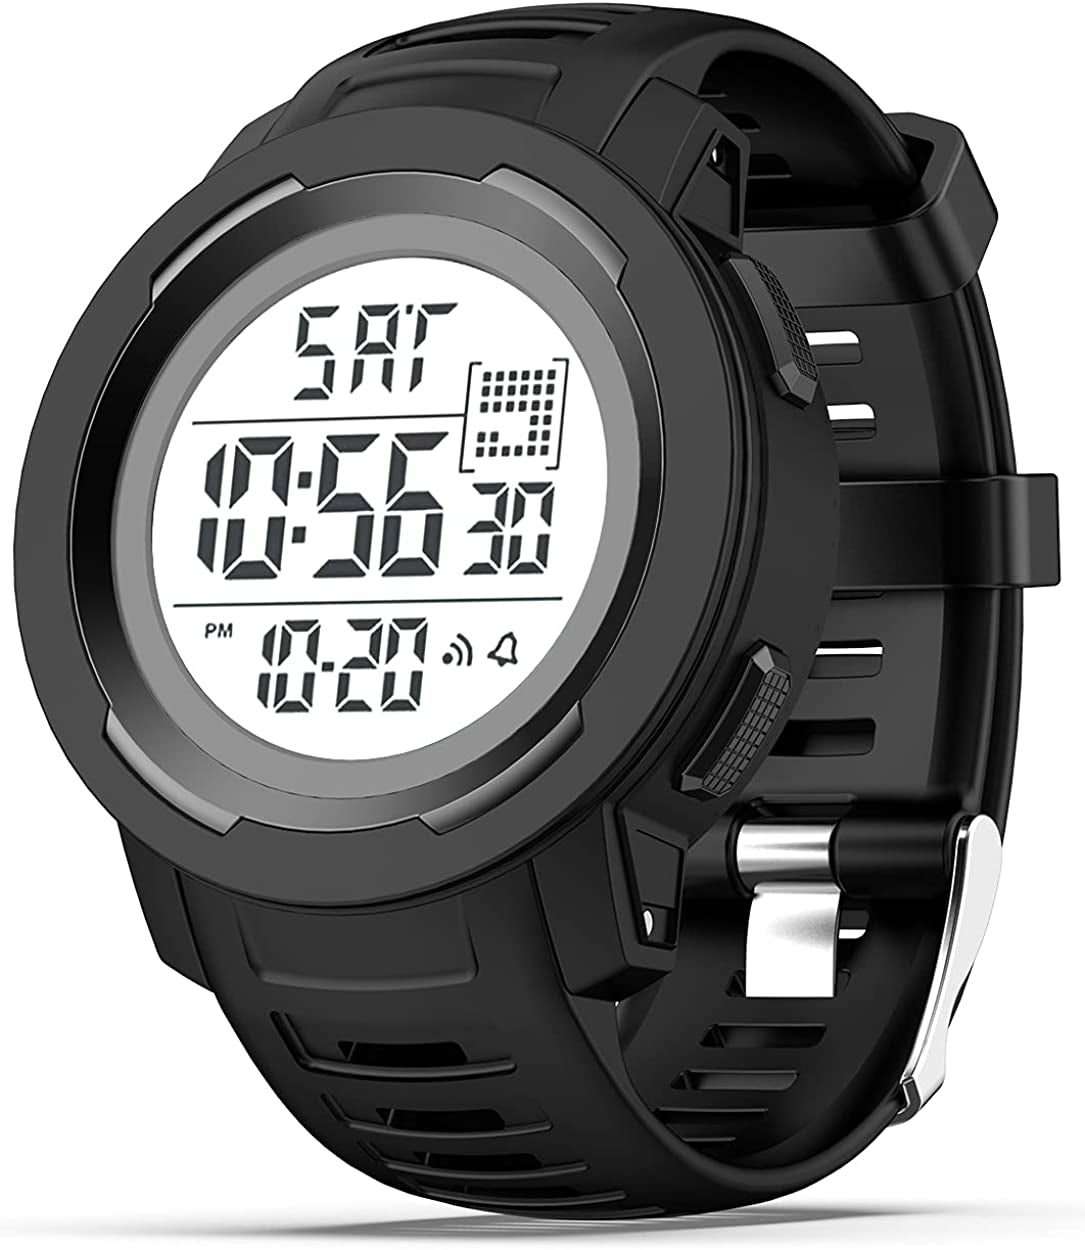 Mens Digital Sport Watches for Men Wrist Watches for Men with Alarm Stopwatch Waterproof